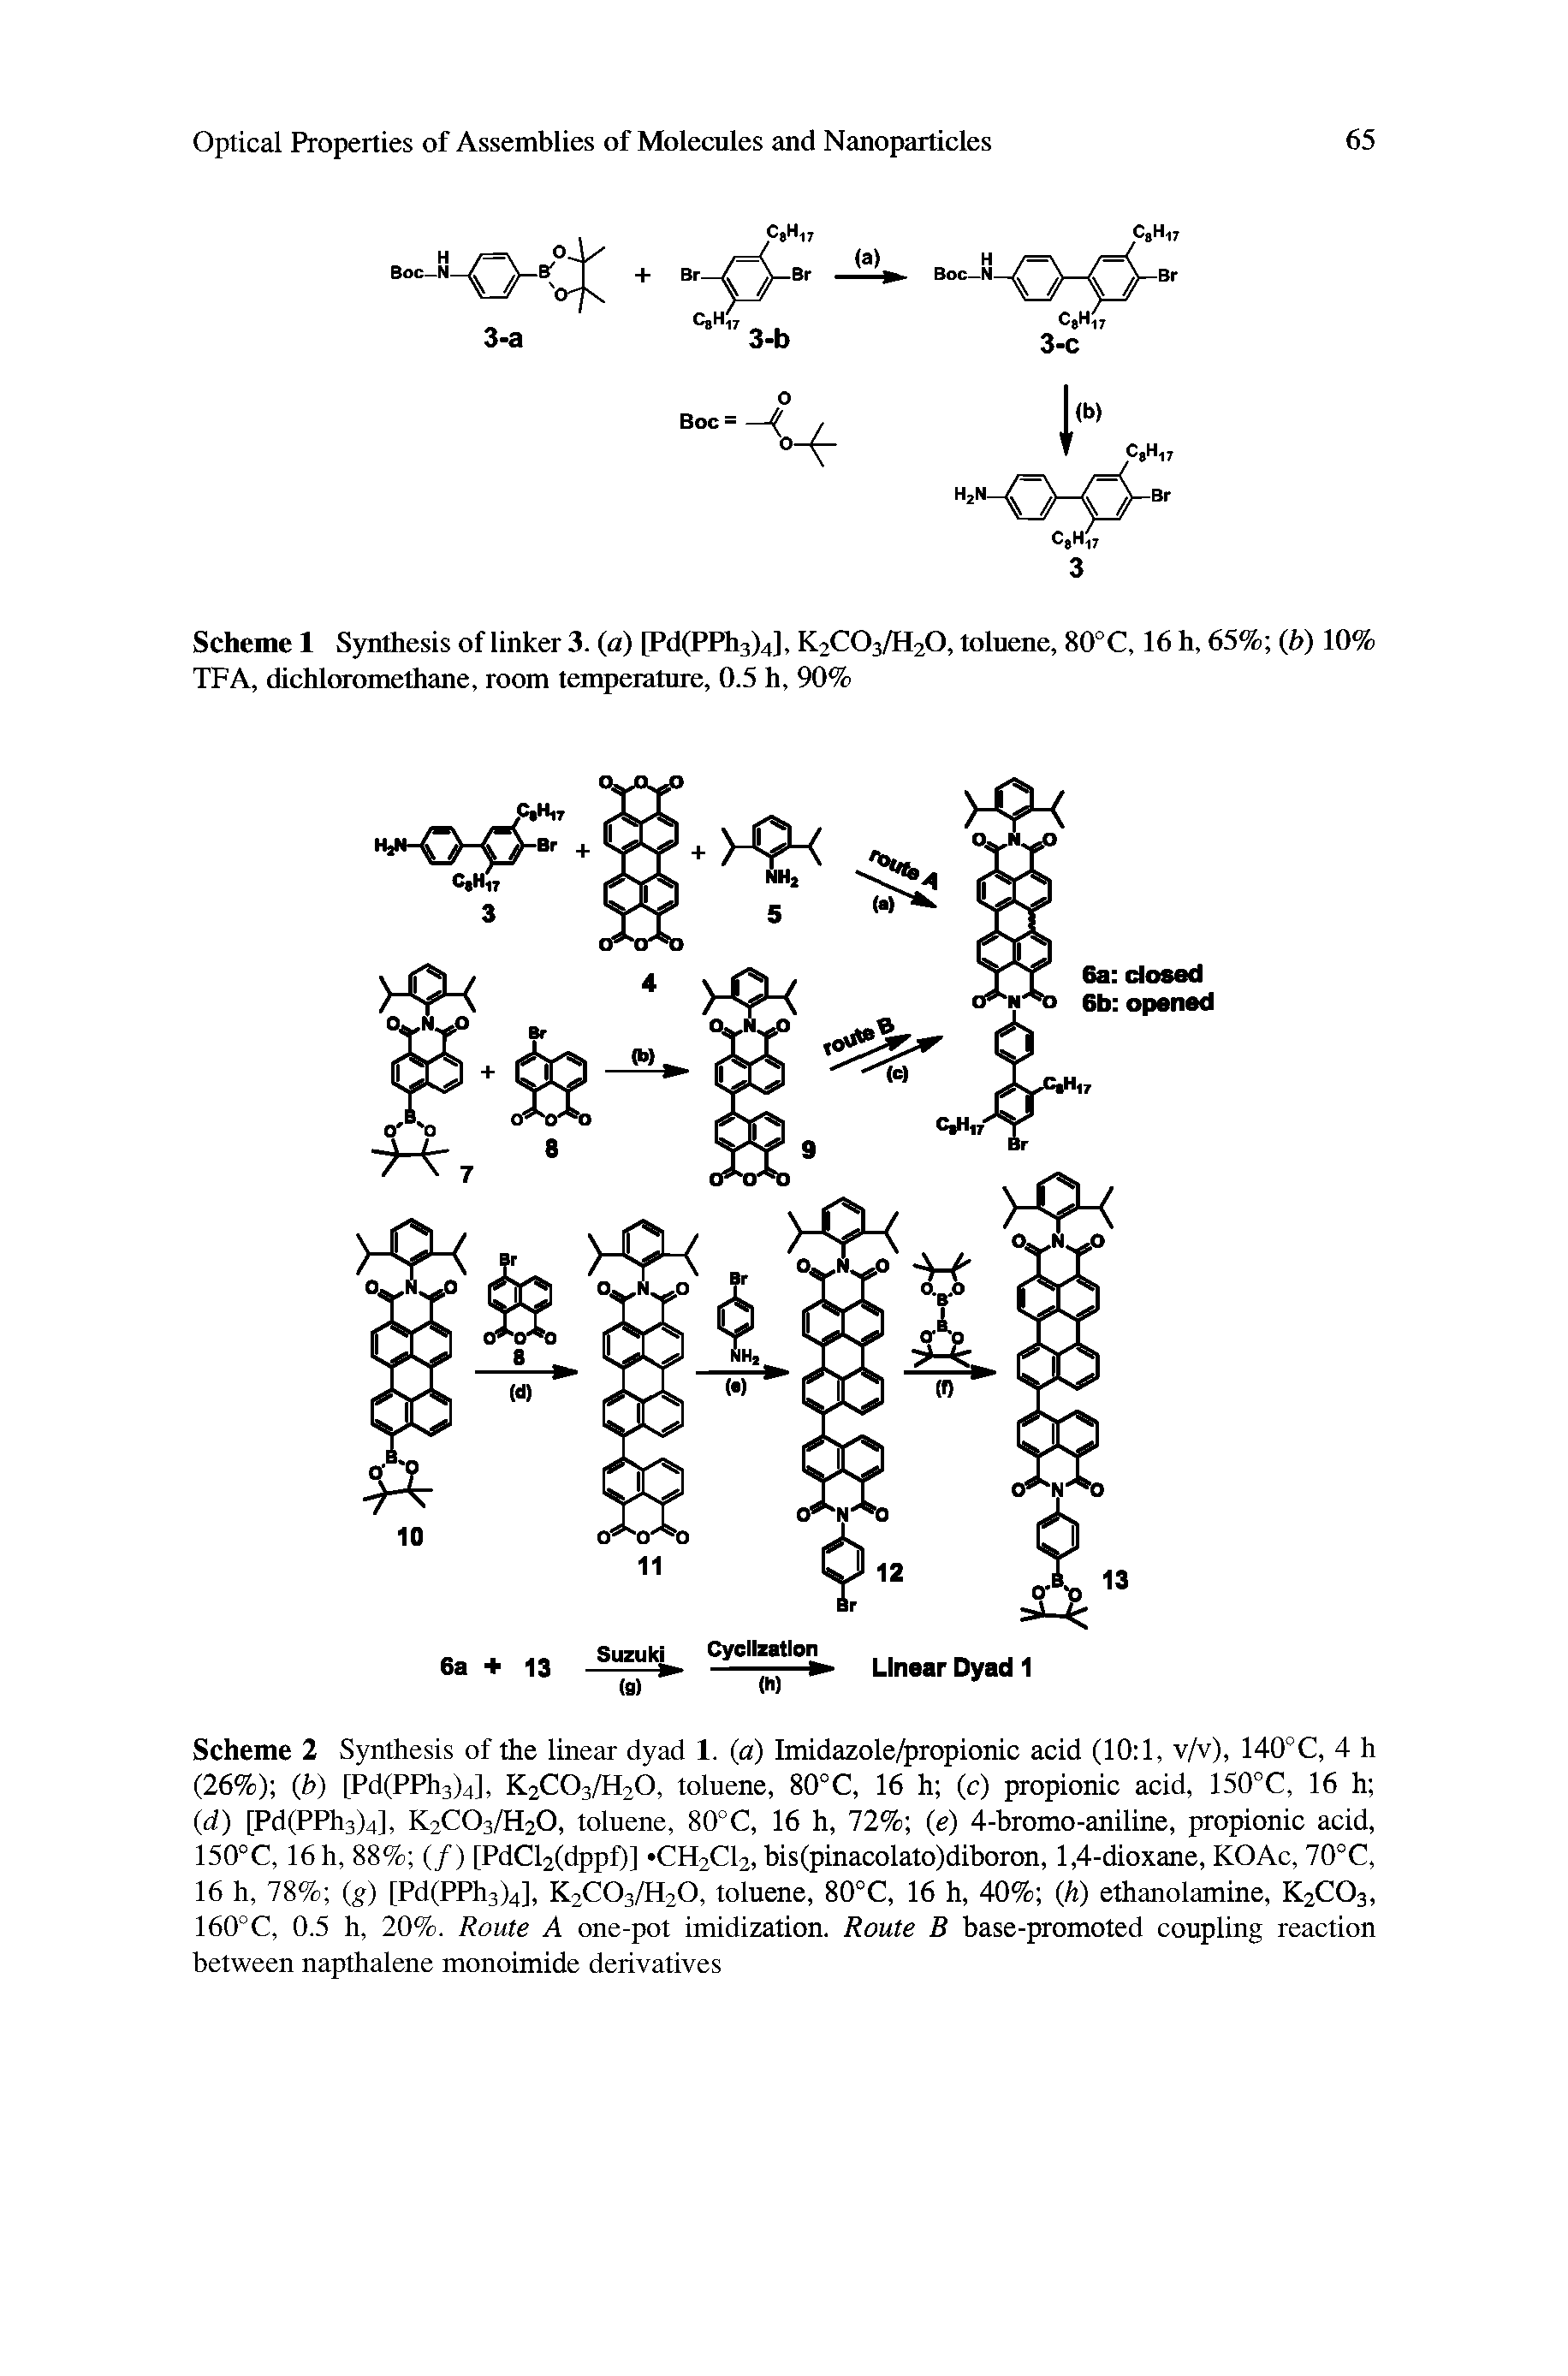 Scheme 2 Synthesis of the linear dyad 1. (a) Imidazole ropionic acid (10 1, v/v), 140°C, 4 h (26%) (b) Pd(PPh3)4], K2CO3/H2O, toluene, 80°C, 16 h (c) propionic acid, 150°C, 16 h (d) Pd(PPh3)4], K2CO3/H2O, toluene, 80°C, 16 h, 72% (e) 4-bromo-aniline, propionic acid, 150°C, 16 h, 88% (/) [PdCl2(dppf)] CH2CI2, bis(pinacolato)diboron, 1,4-dioxane, KOAc, 70°C, 16 h, 78% (g) [Pd(PPh3>4], K2CO3/H2O, toluene, 80°C, 16 h, 40% (h) ethanolamine, K2CO3, 160°C, 0.5 h, 20%. Route A one-pot imidization. Route B base-promoted coupling reaction between napthalene monoimide derivatives...